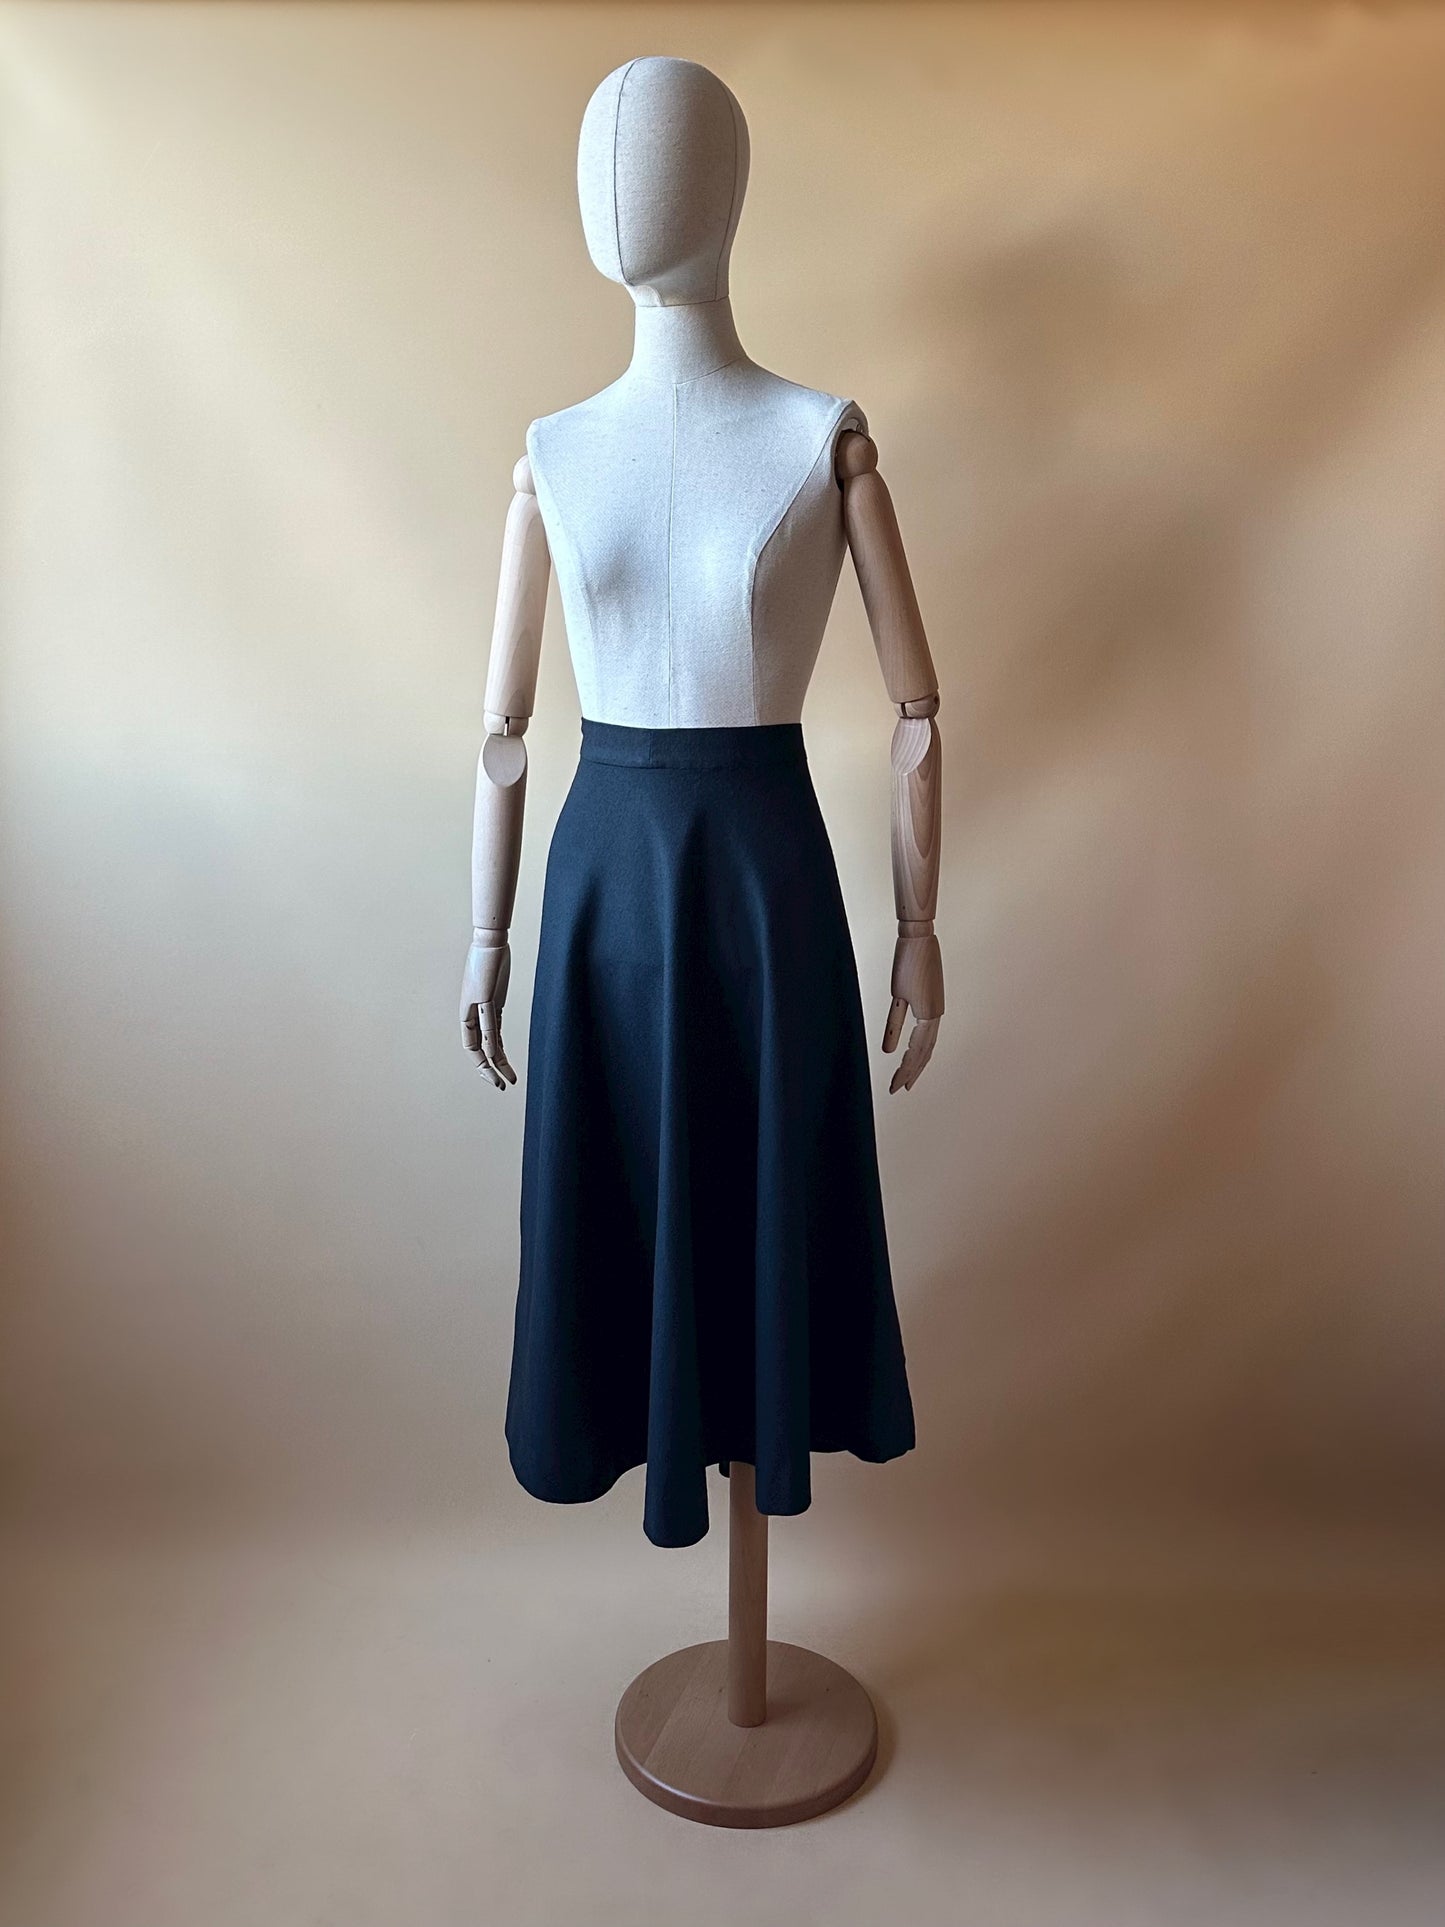 Vintage Black Woolen Skirt